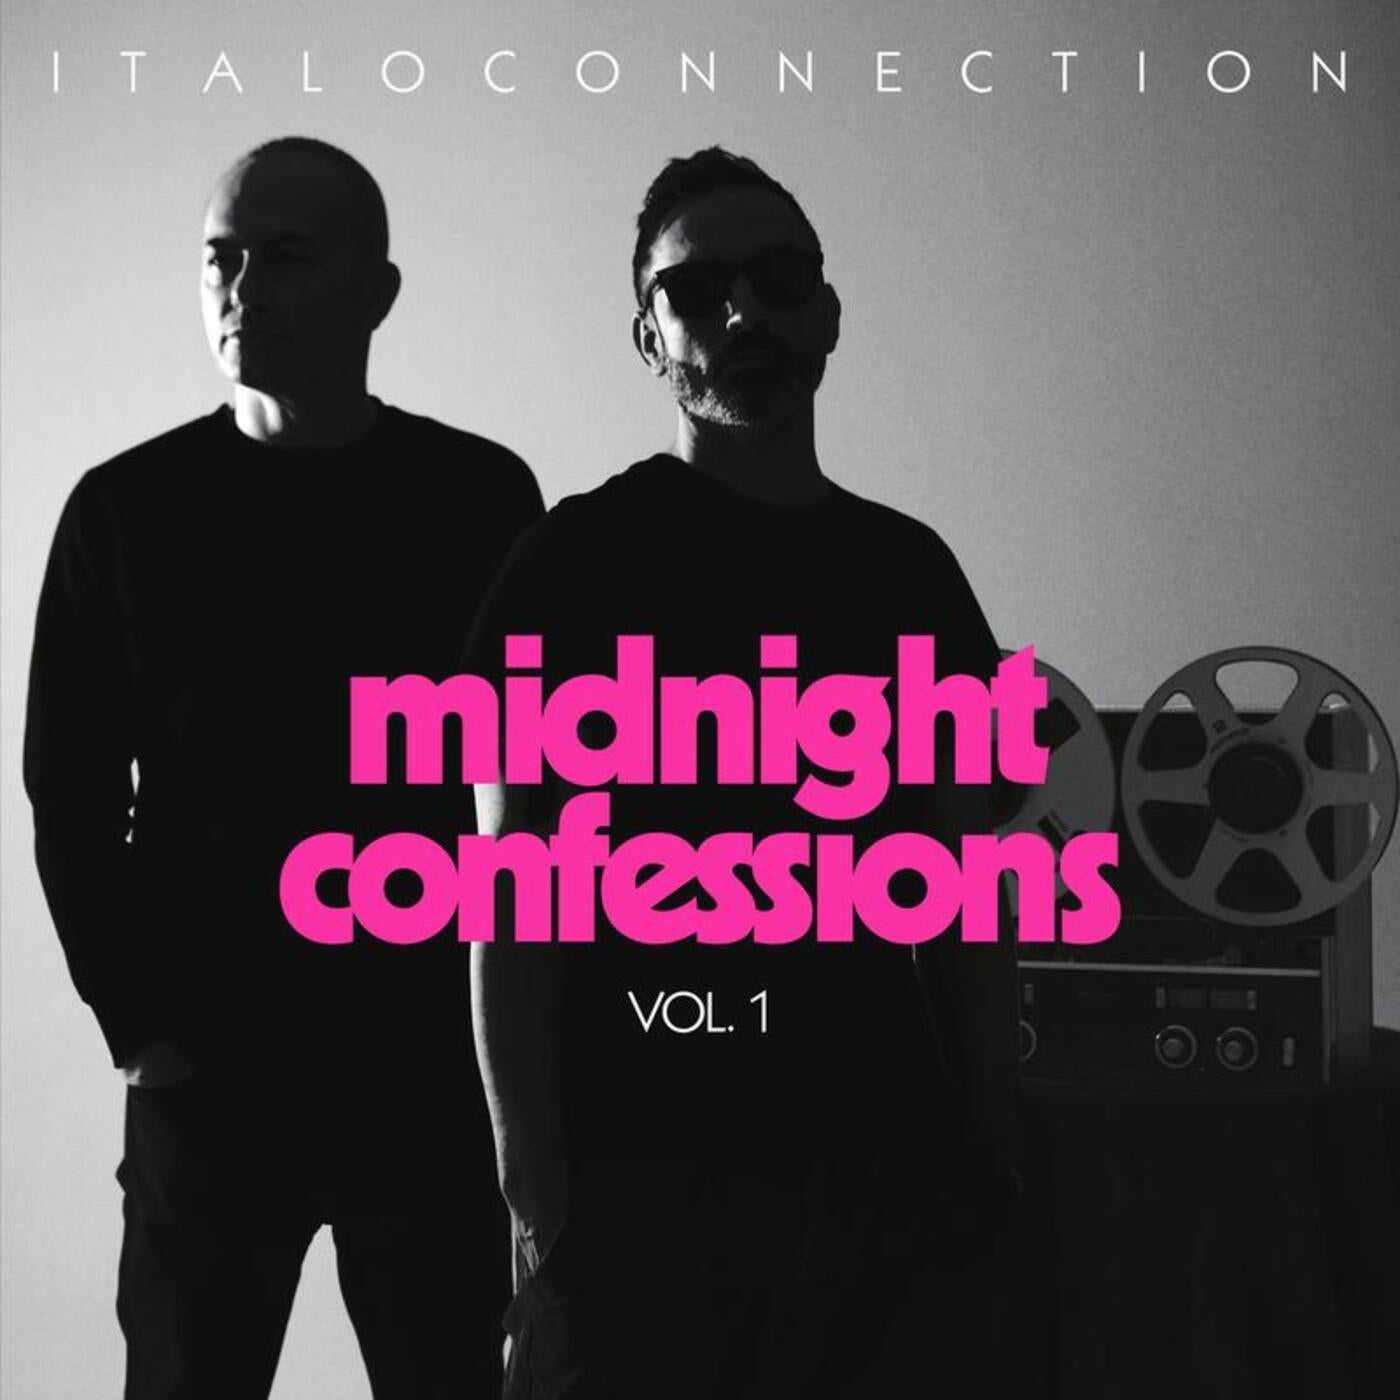 Italoconnection – Midnight Confessions Vol. 1 [BAP152]